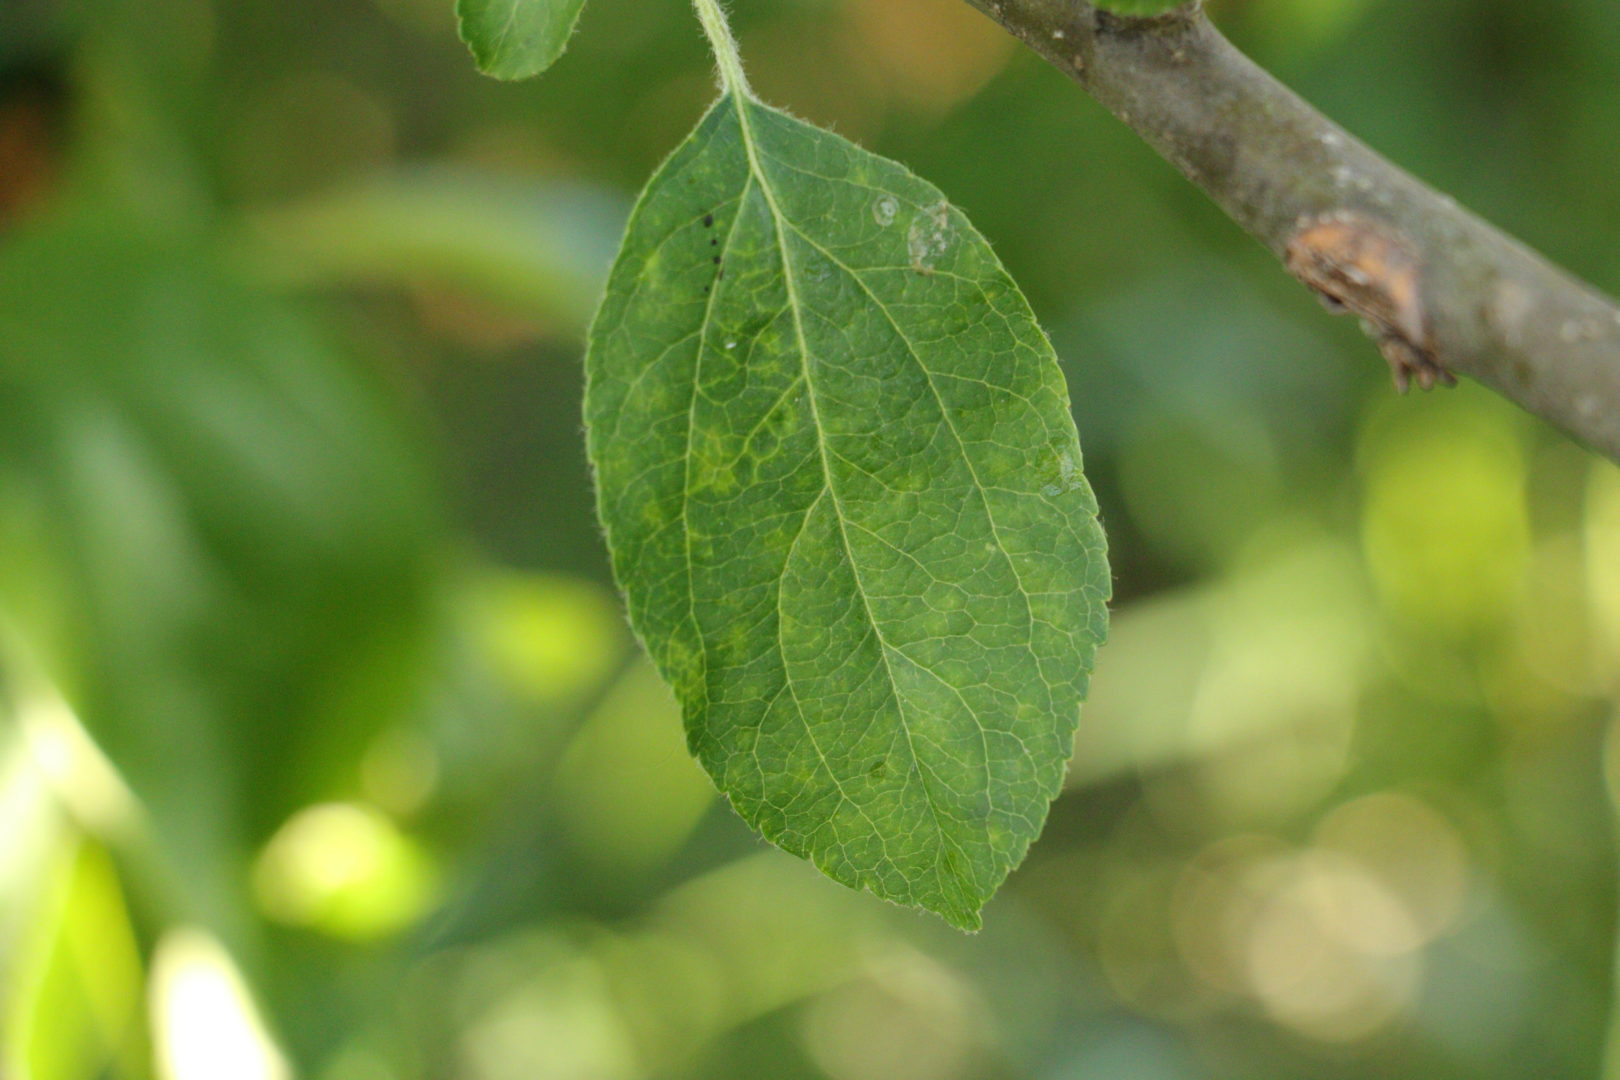 Листья яблони в желтую точечку - хлороз